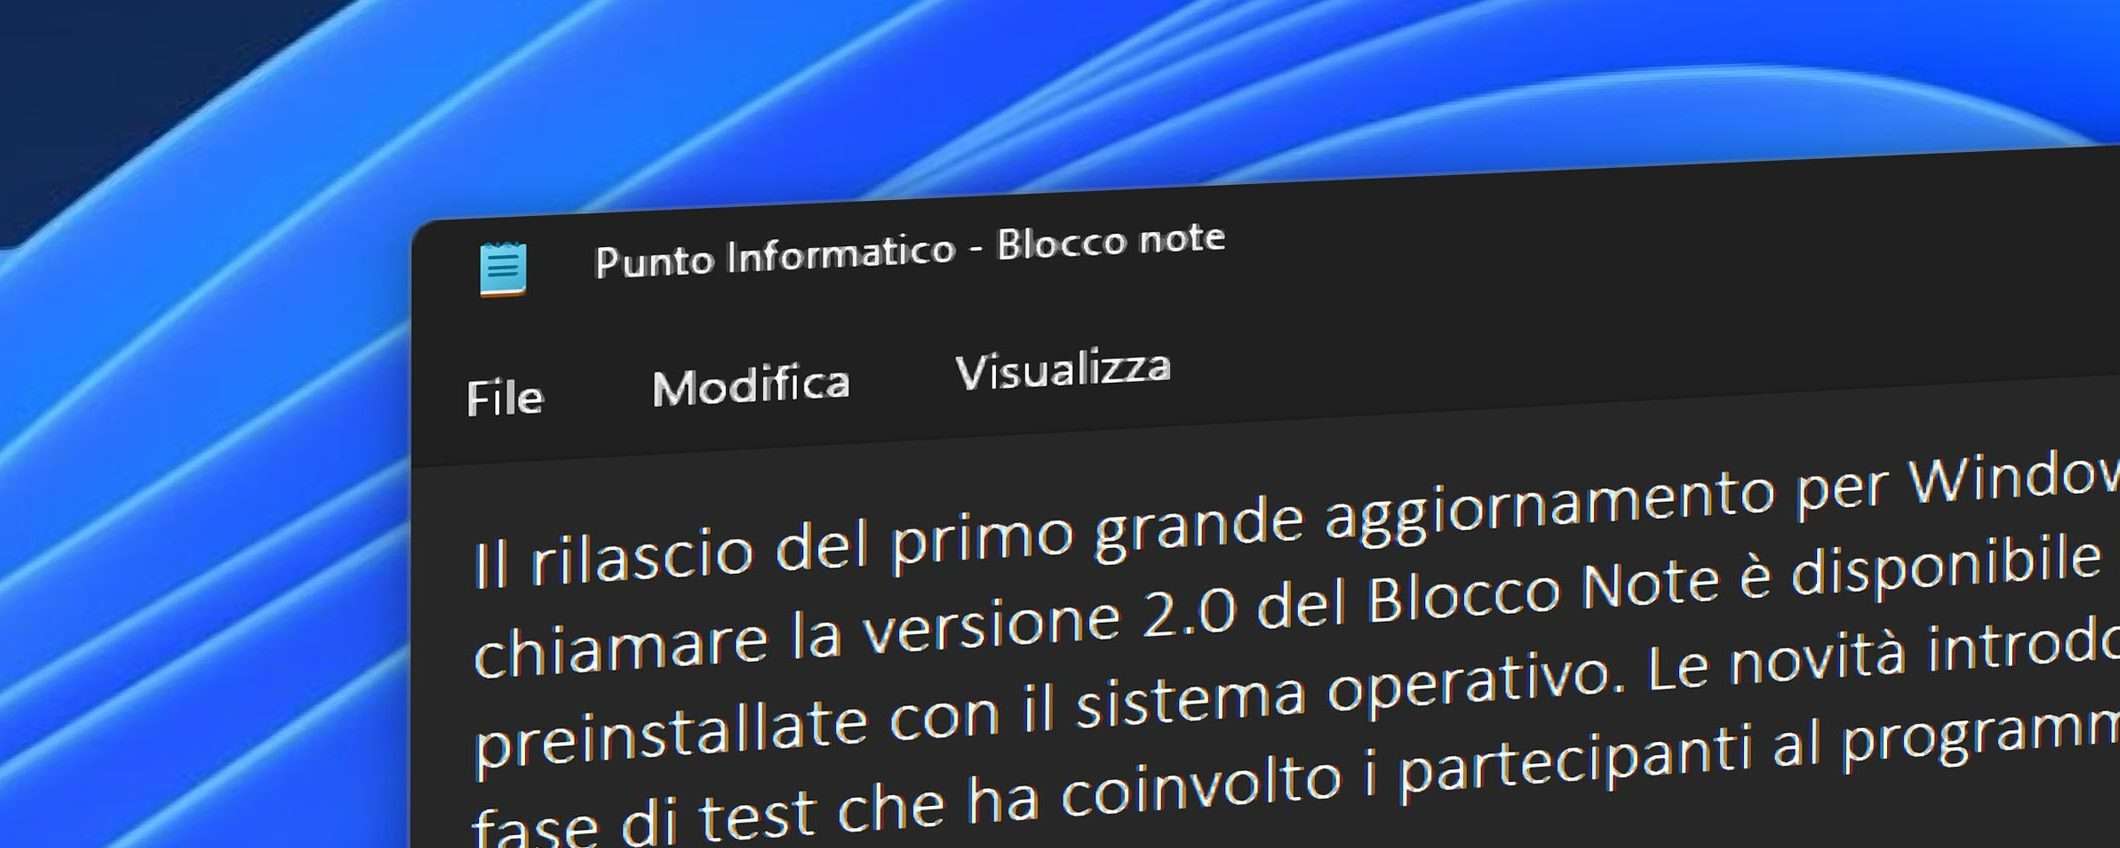 Windows 11: schede anche per NotePad (Blocco Note)